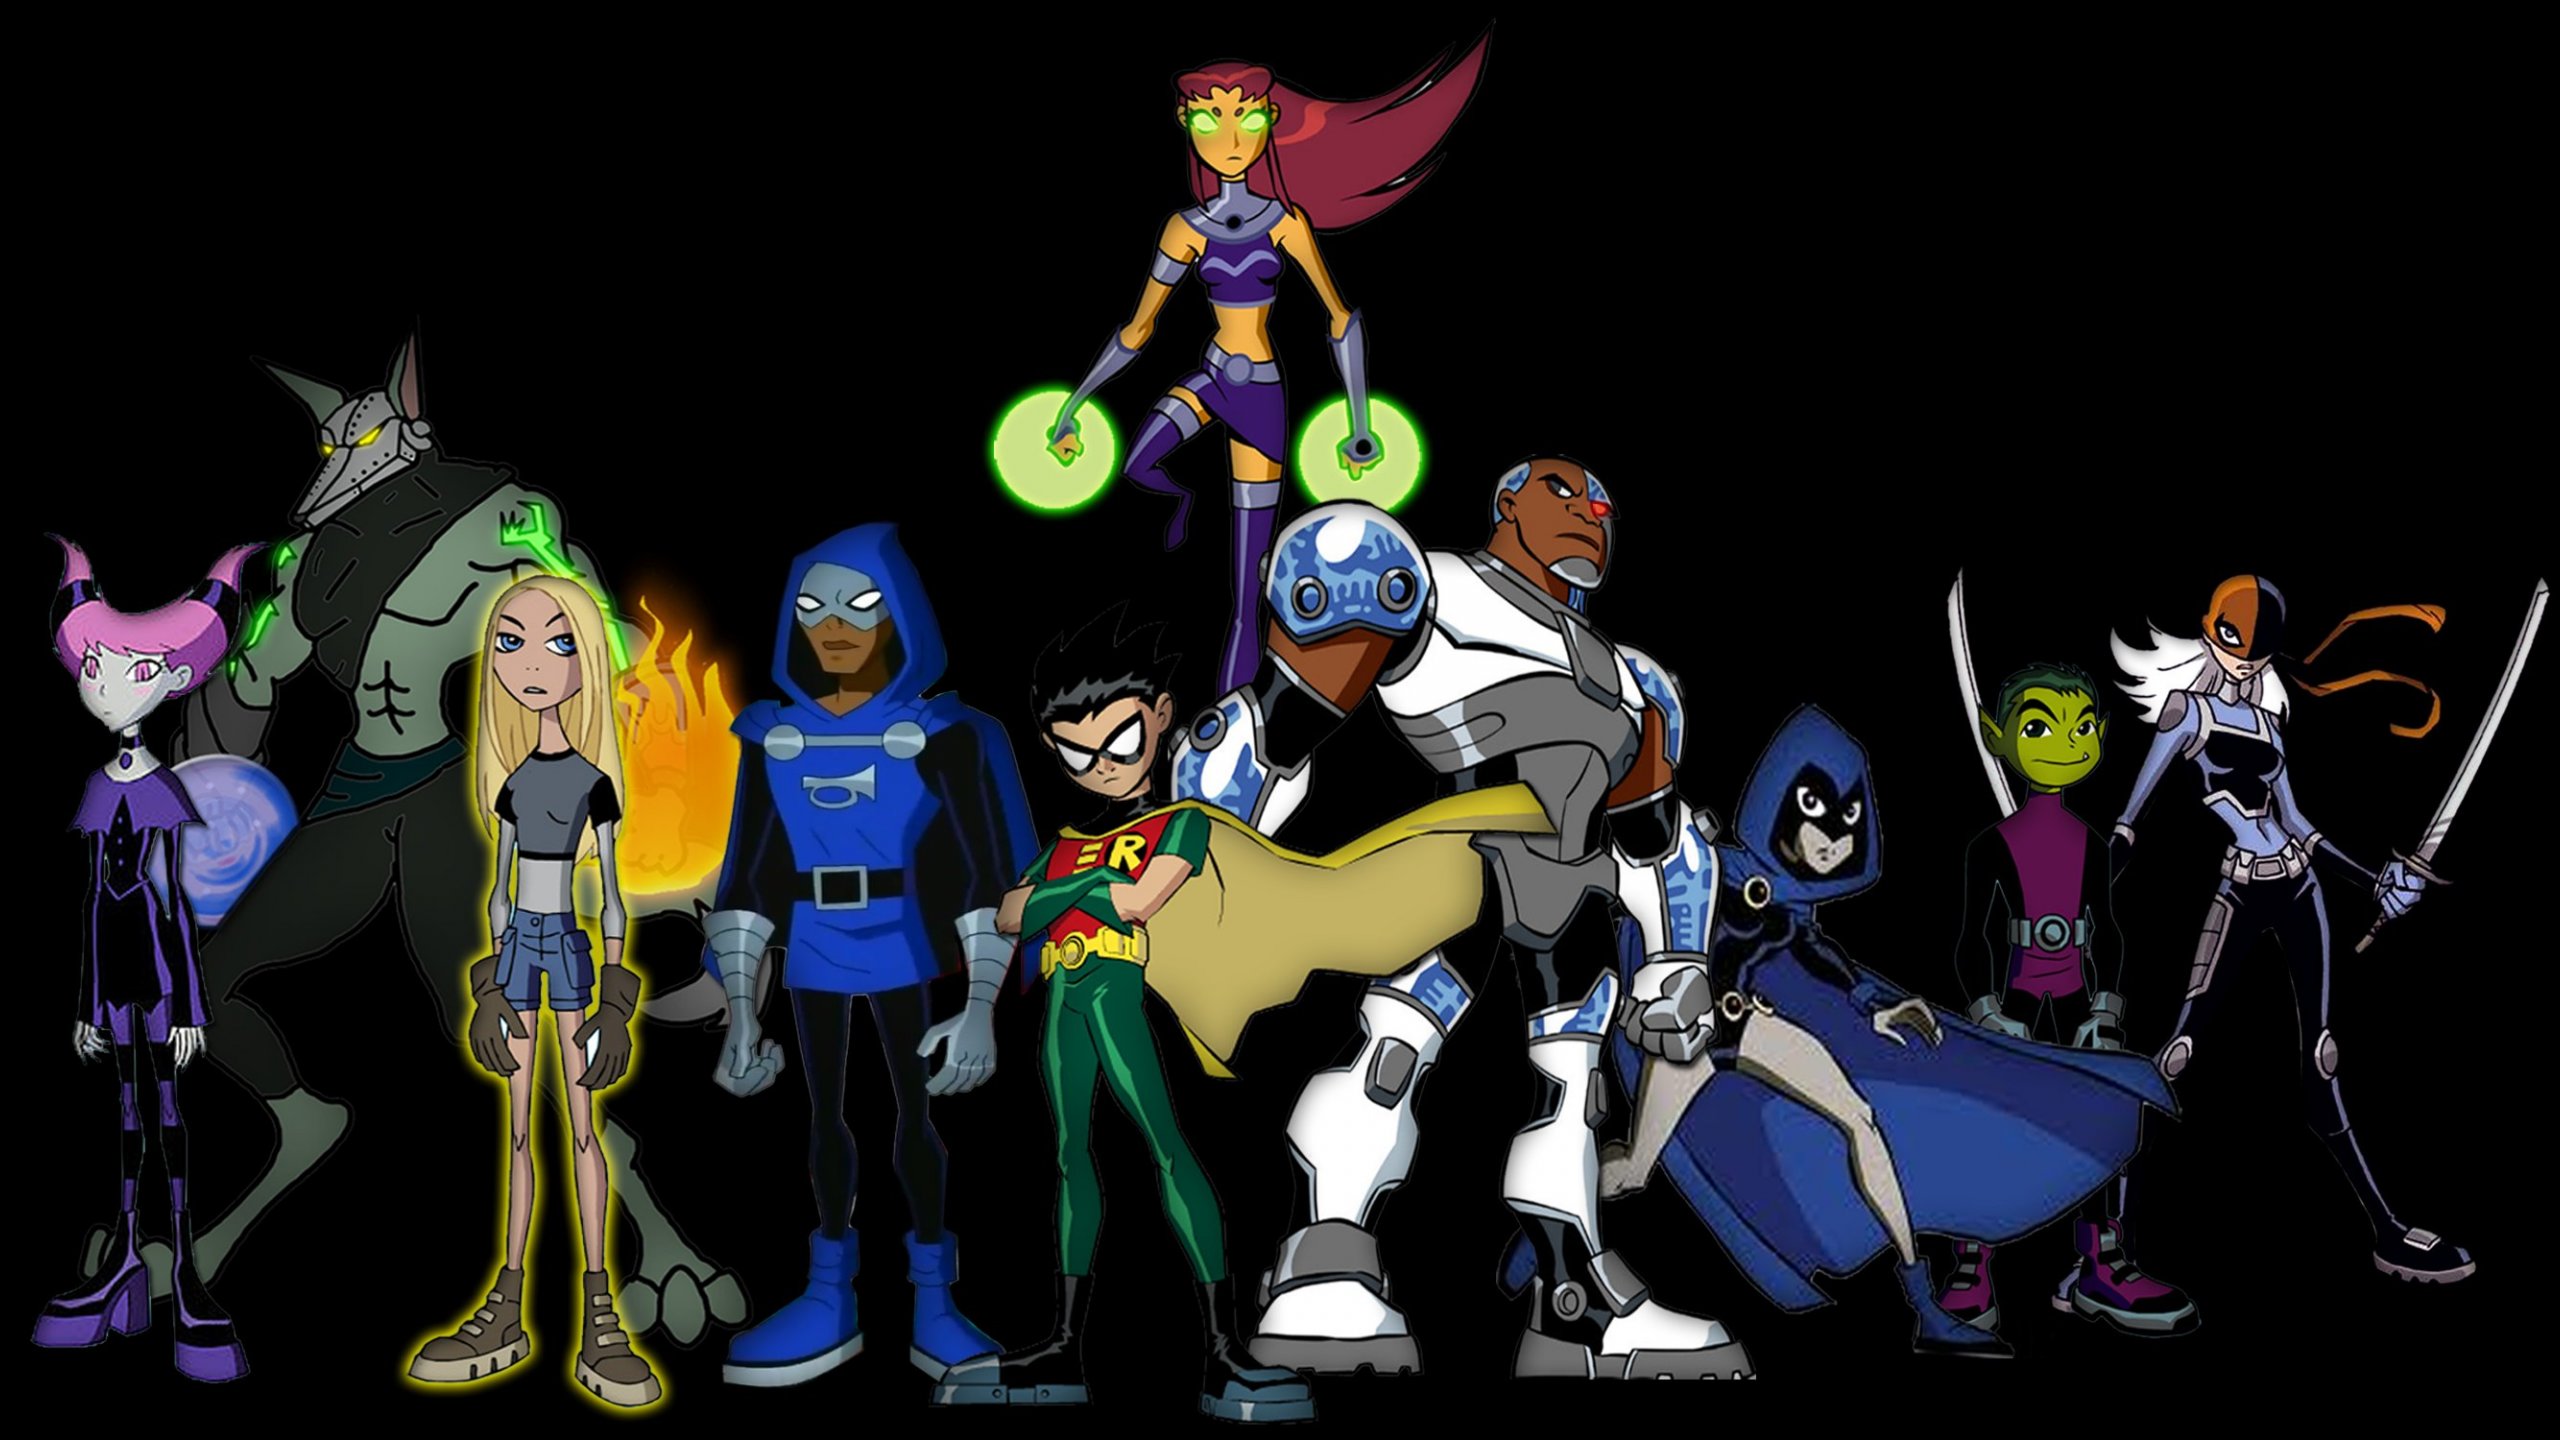 Teen Titans Background